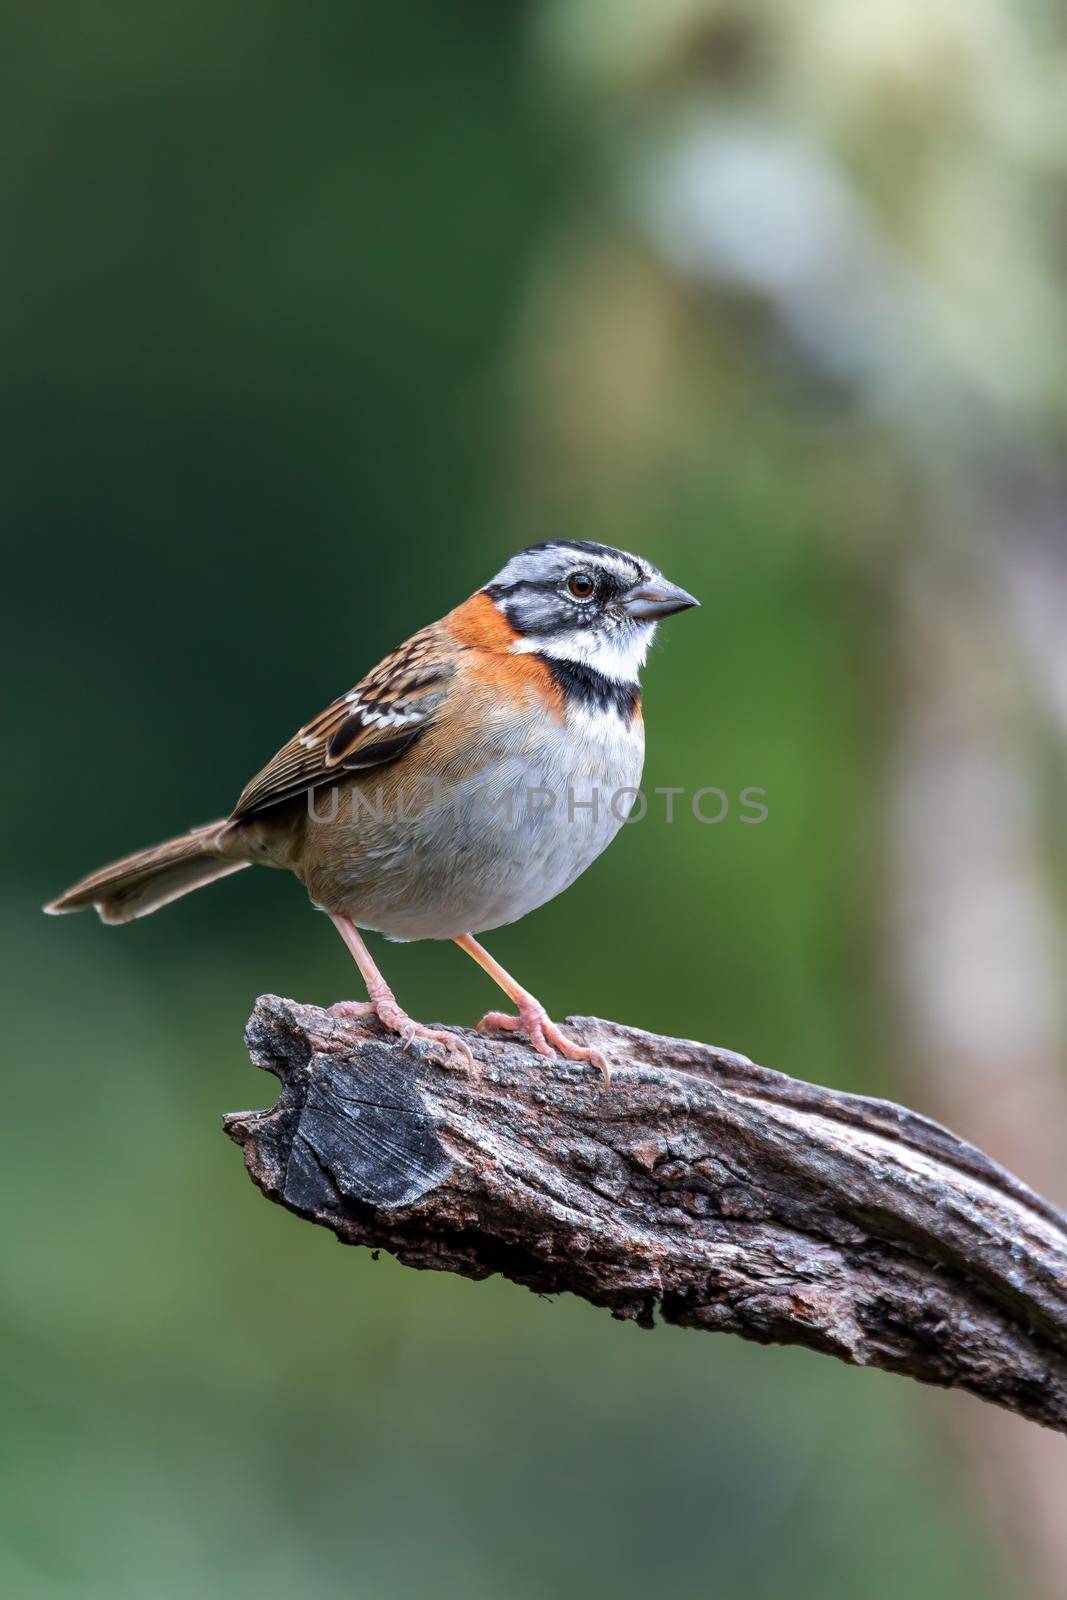 rufous-collared sparrow or Andean sparrow (Zonotrichia capensis), small song bird. San Gerardo de Dota, Wildlife and birdwatching in Costa Rica.